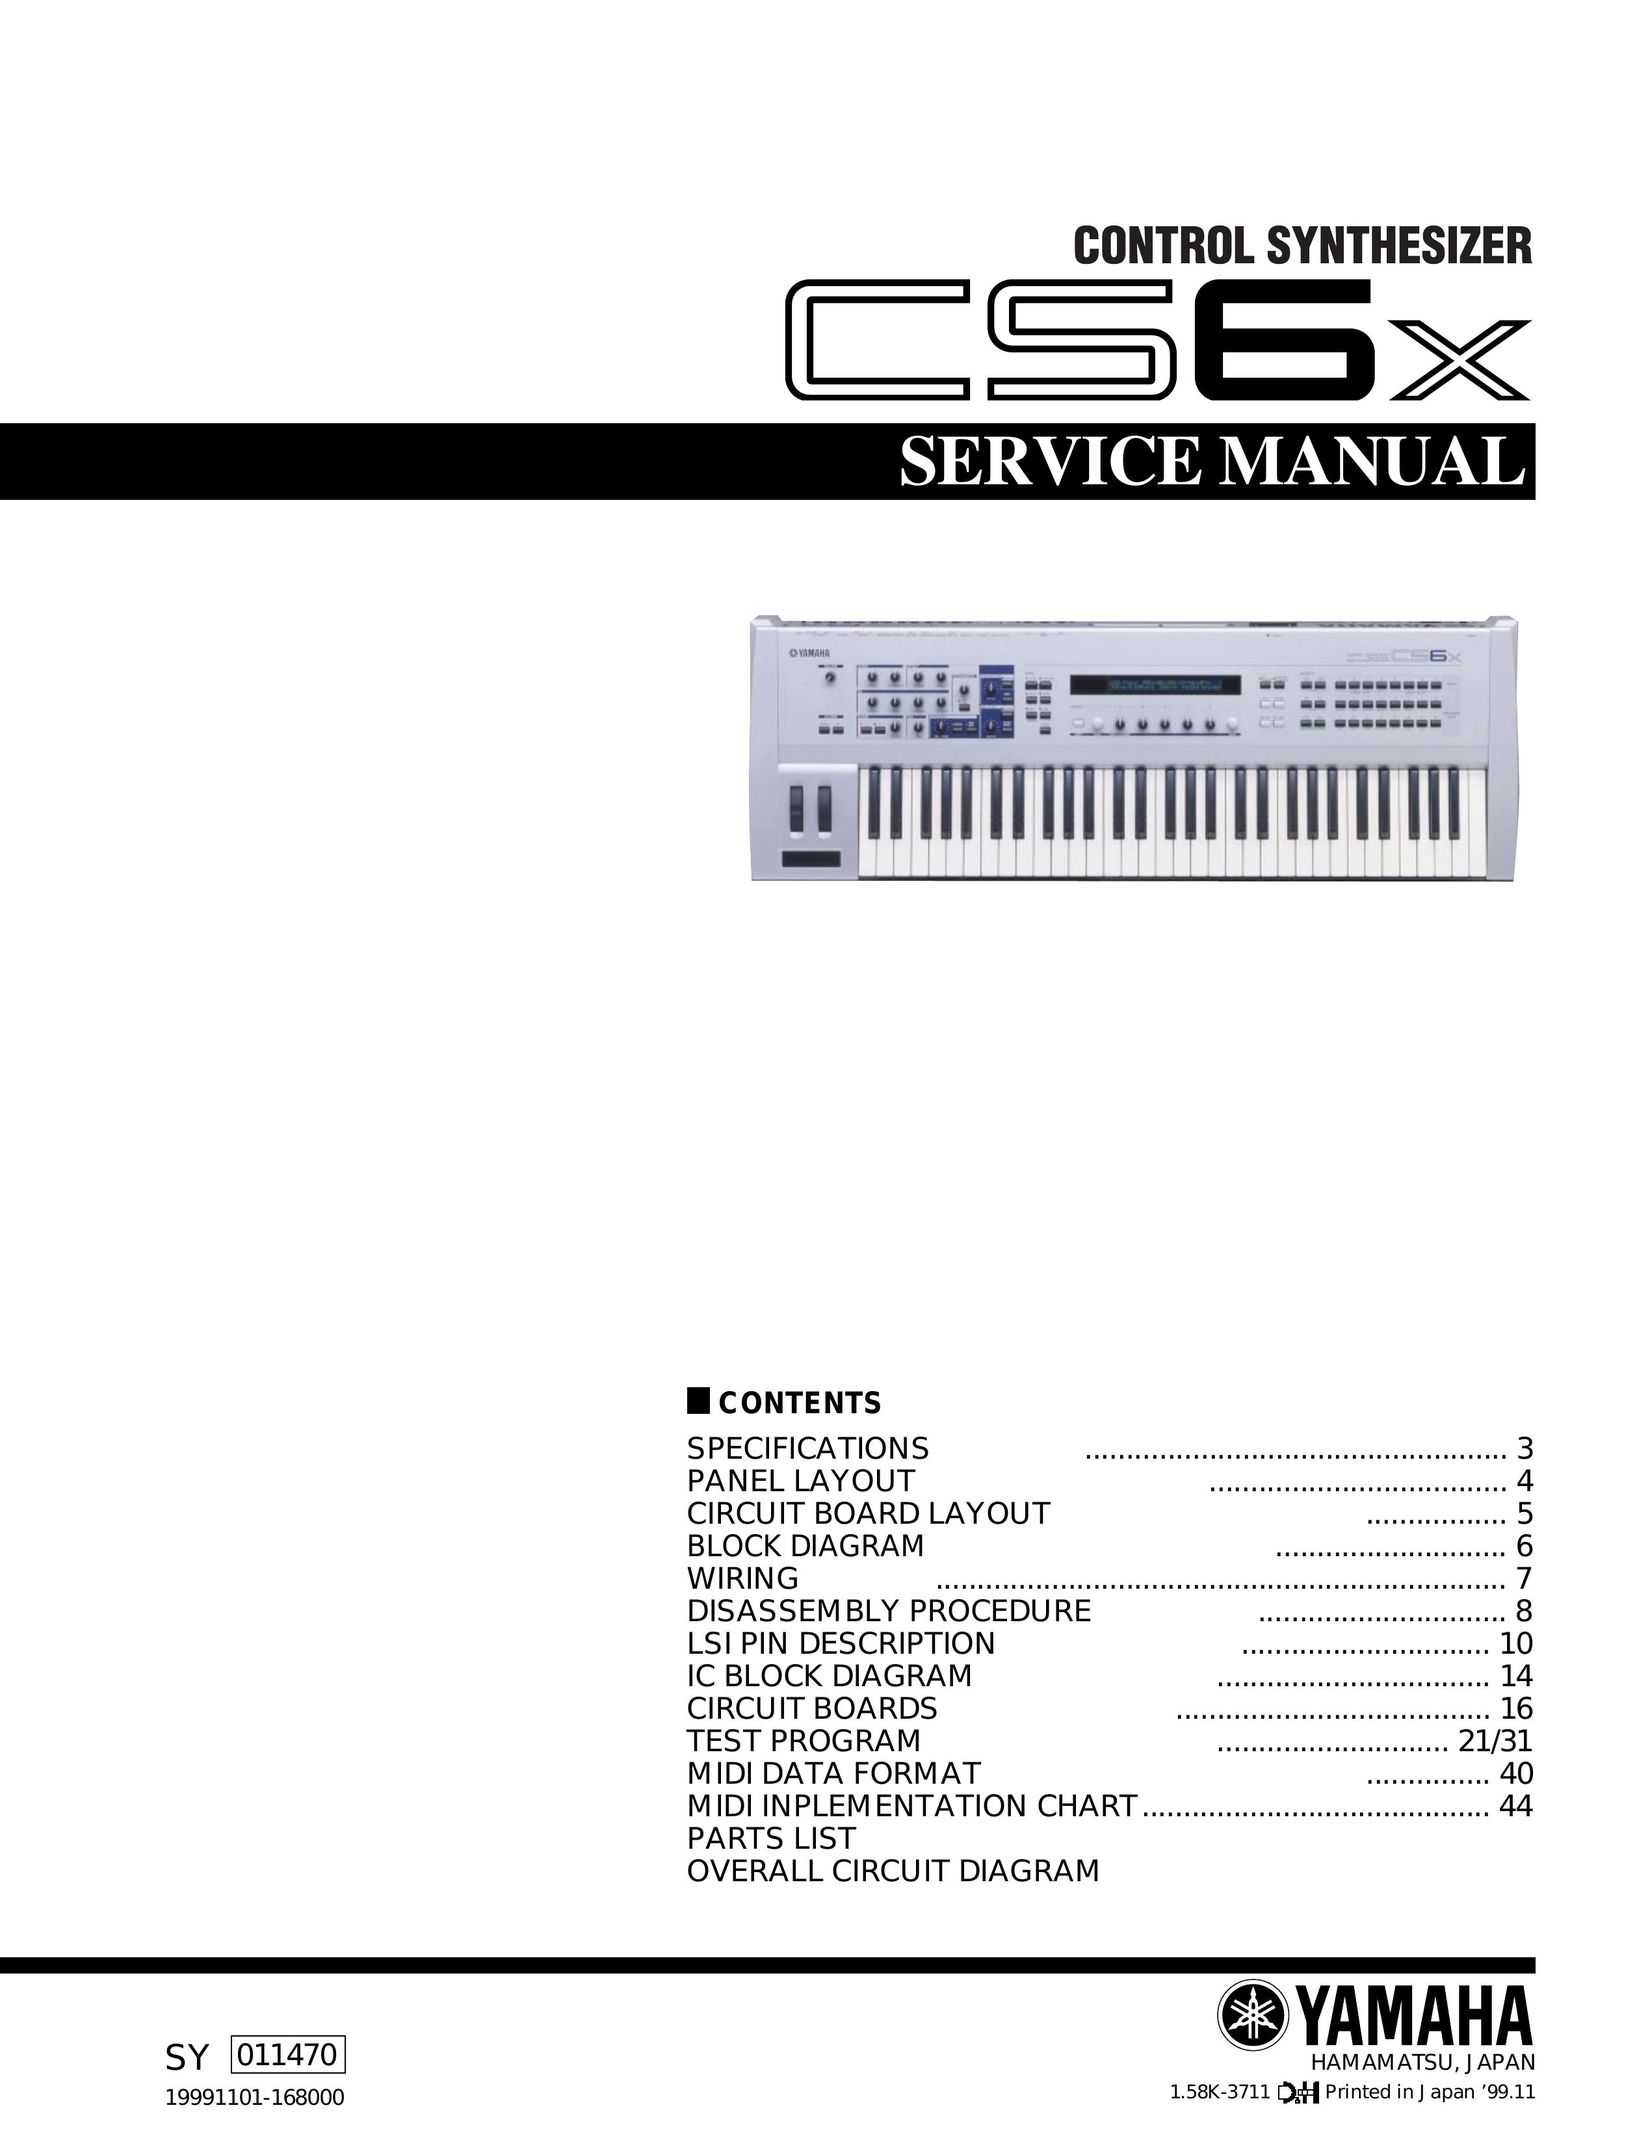 Yamaha SY 011470 Video Game Controller User Manual